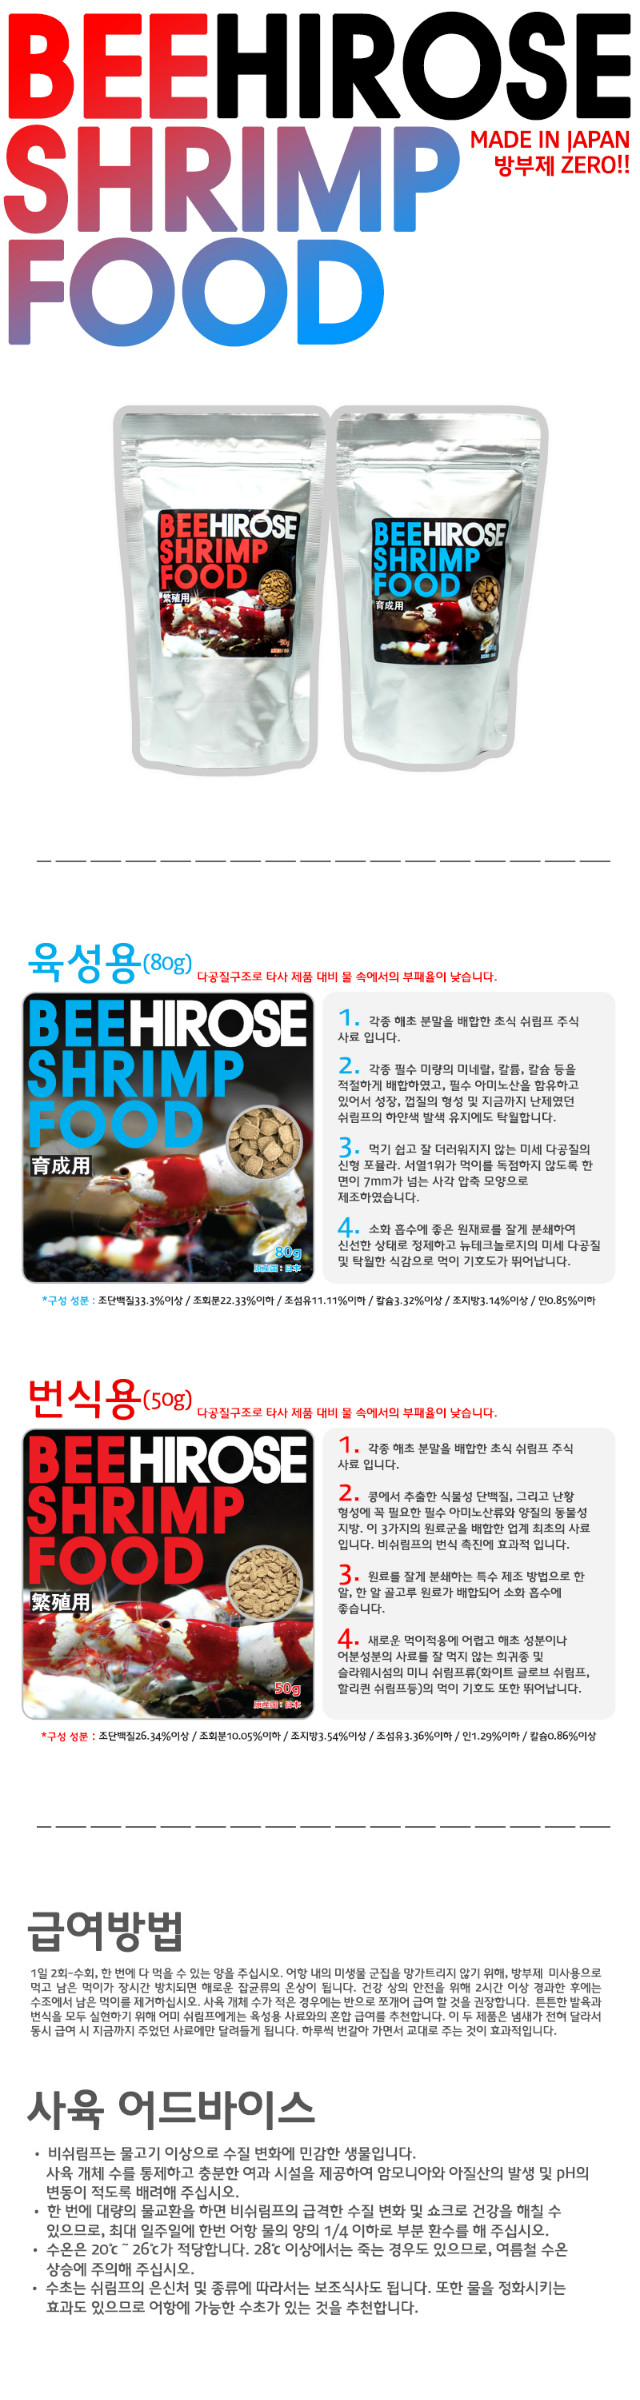 hirose_bee_shrimp_food[0] 내용.jpg